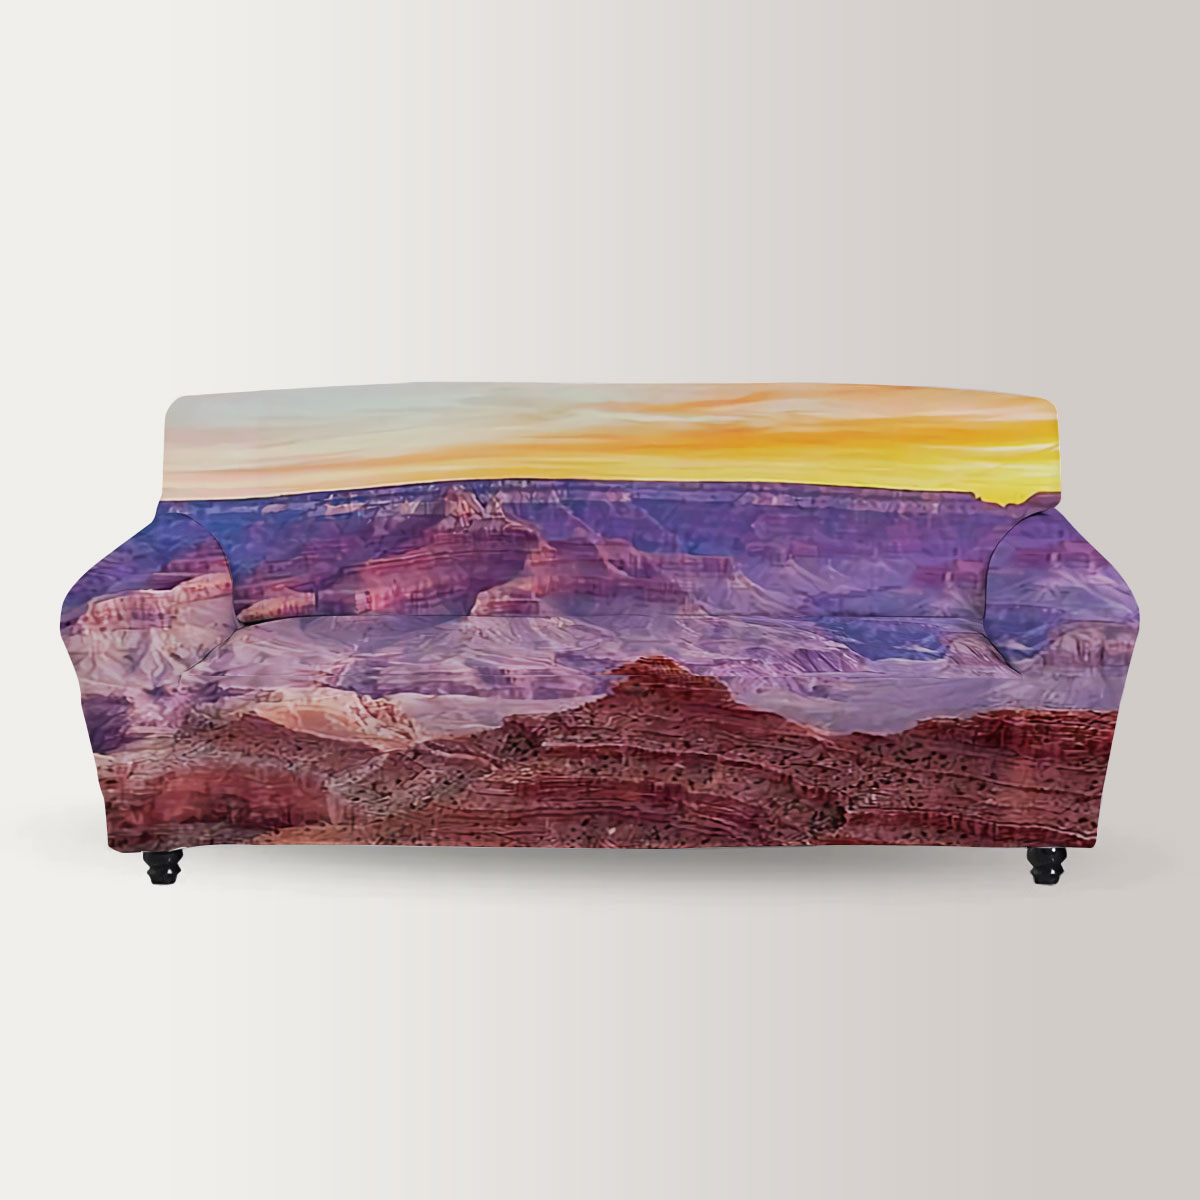 Sunrise Sky at Grand Canyon Sofa Cover